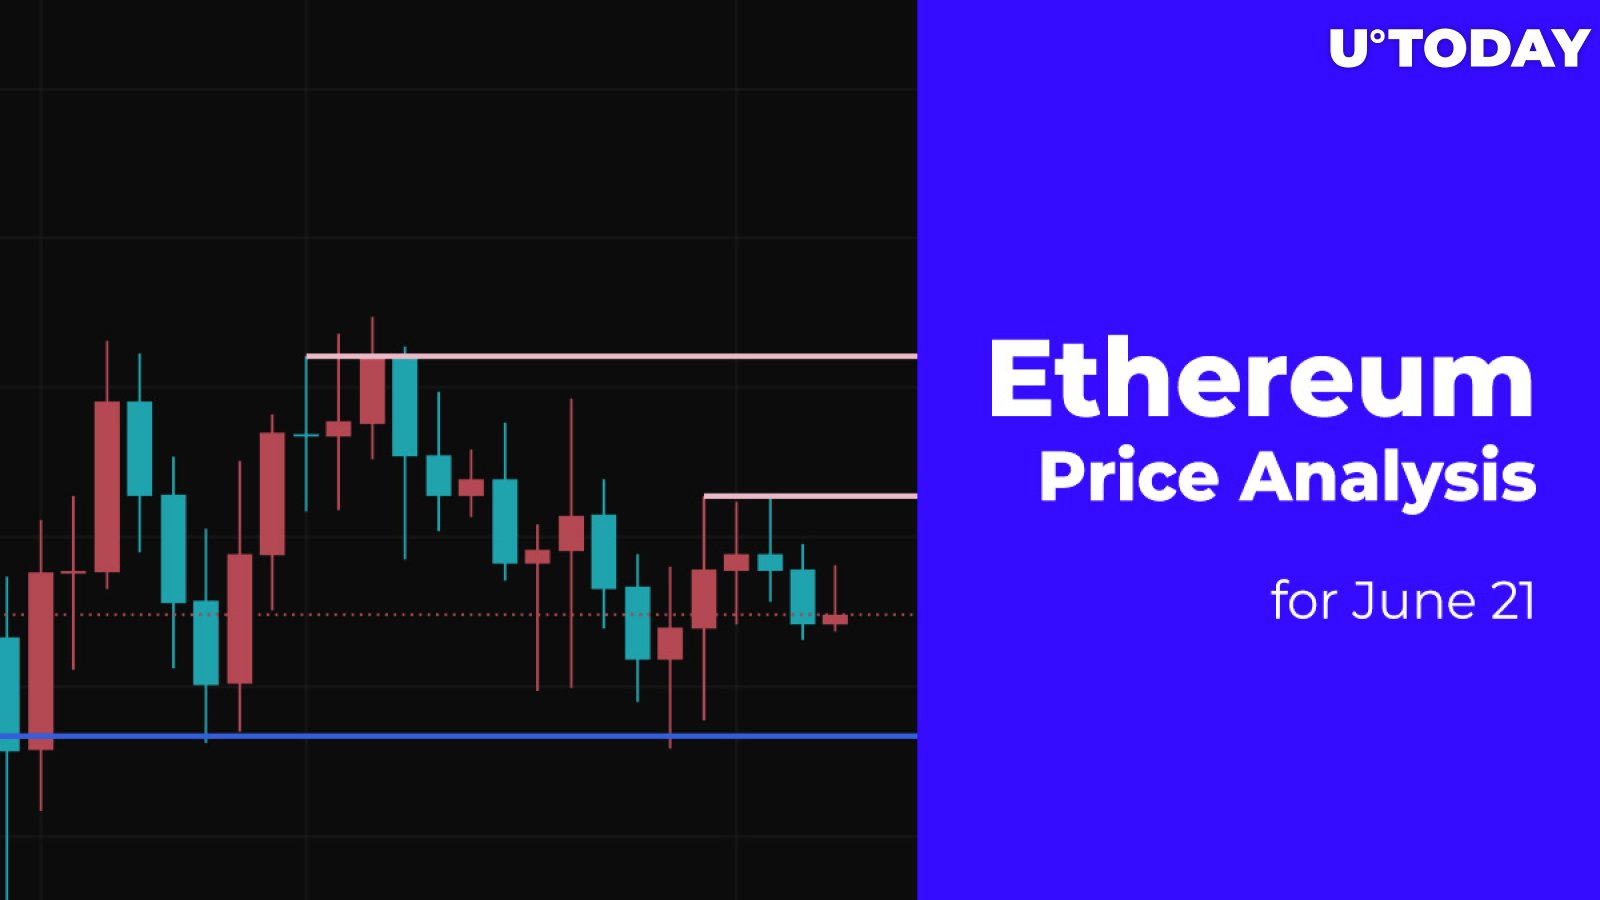 Ethereum (ETH) Price Analysis for June 21